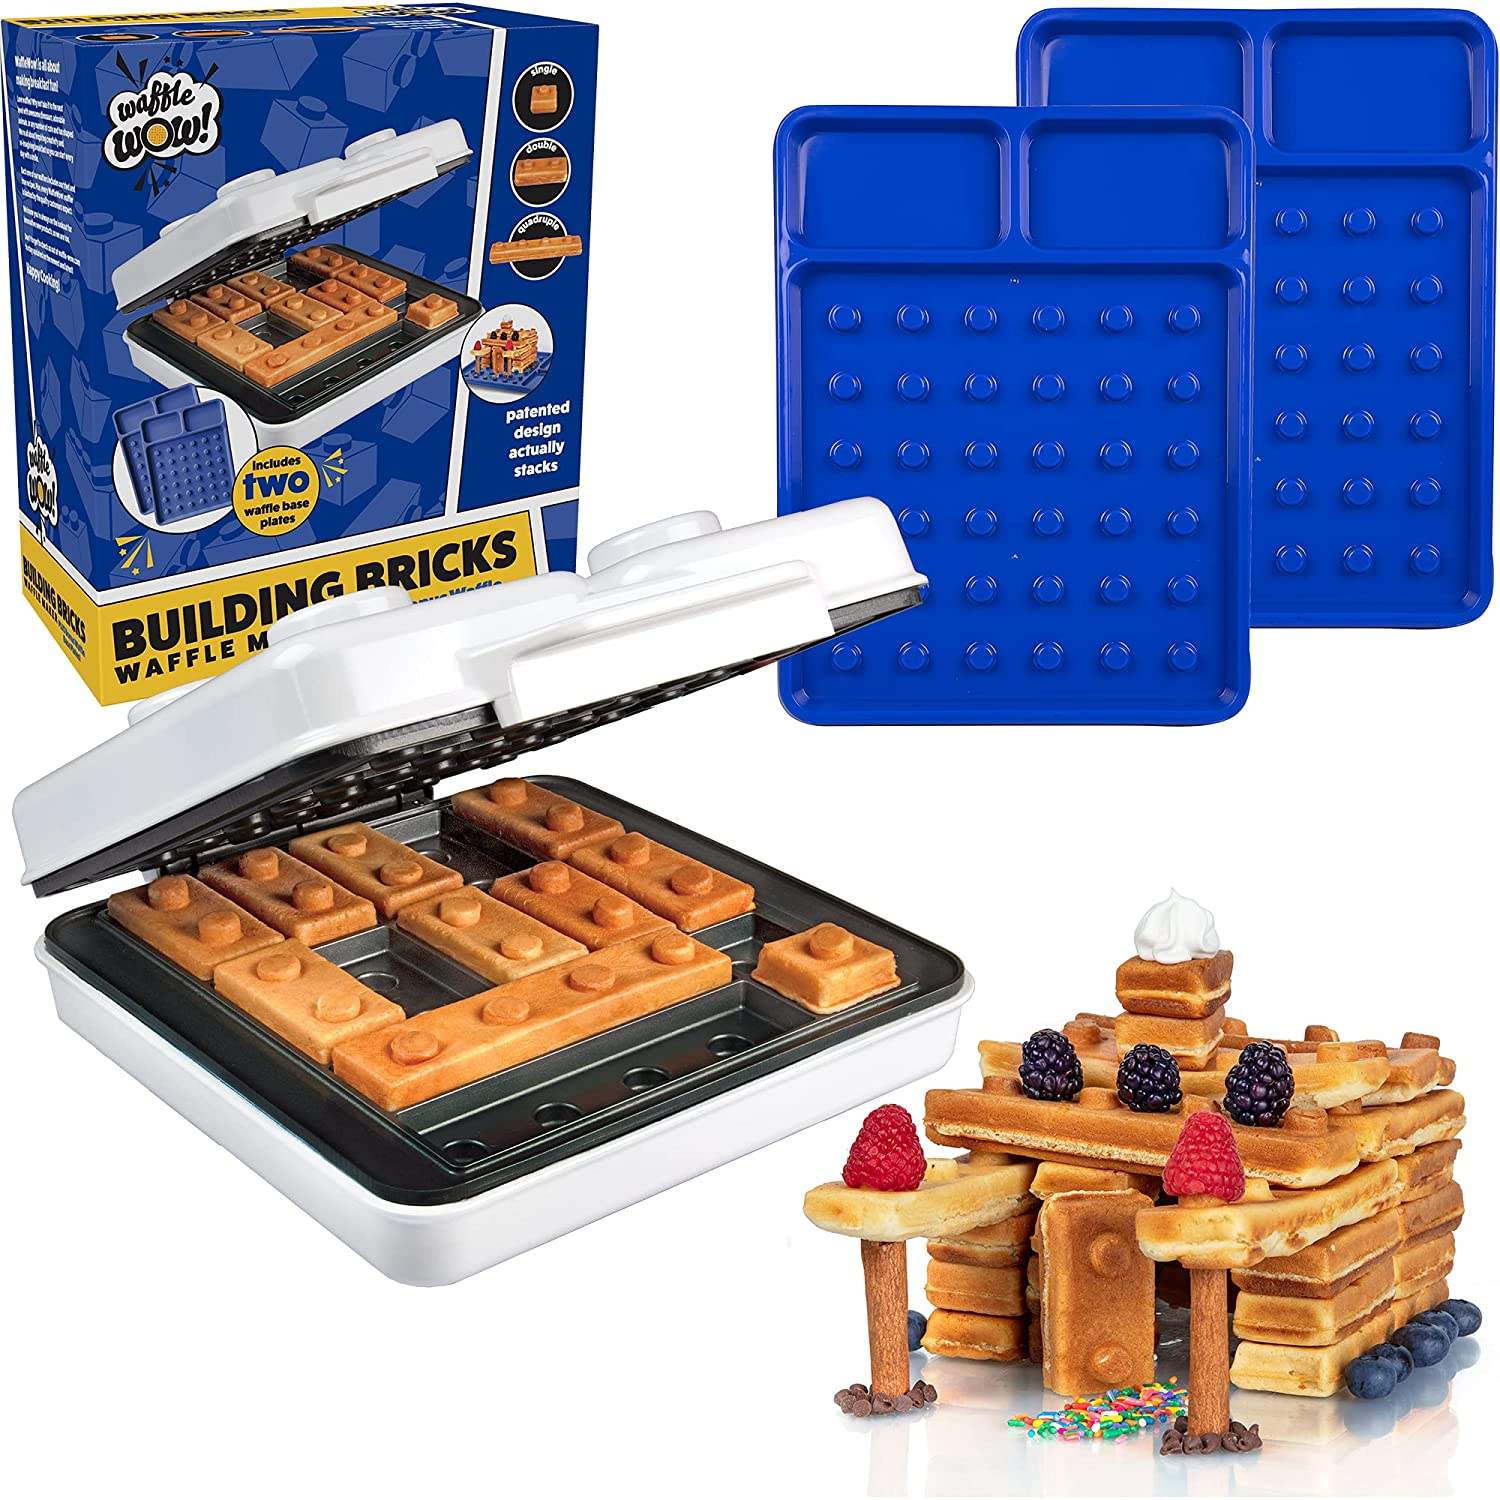 Building Bricks Waffle Maker – Waffle Wow!